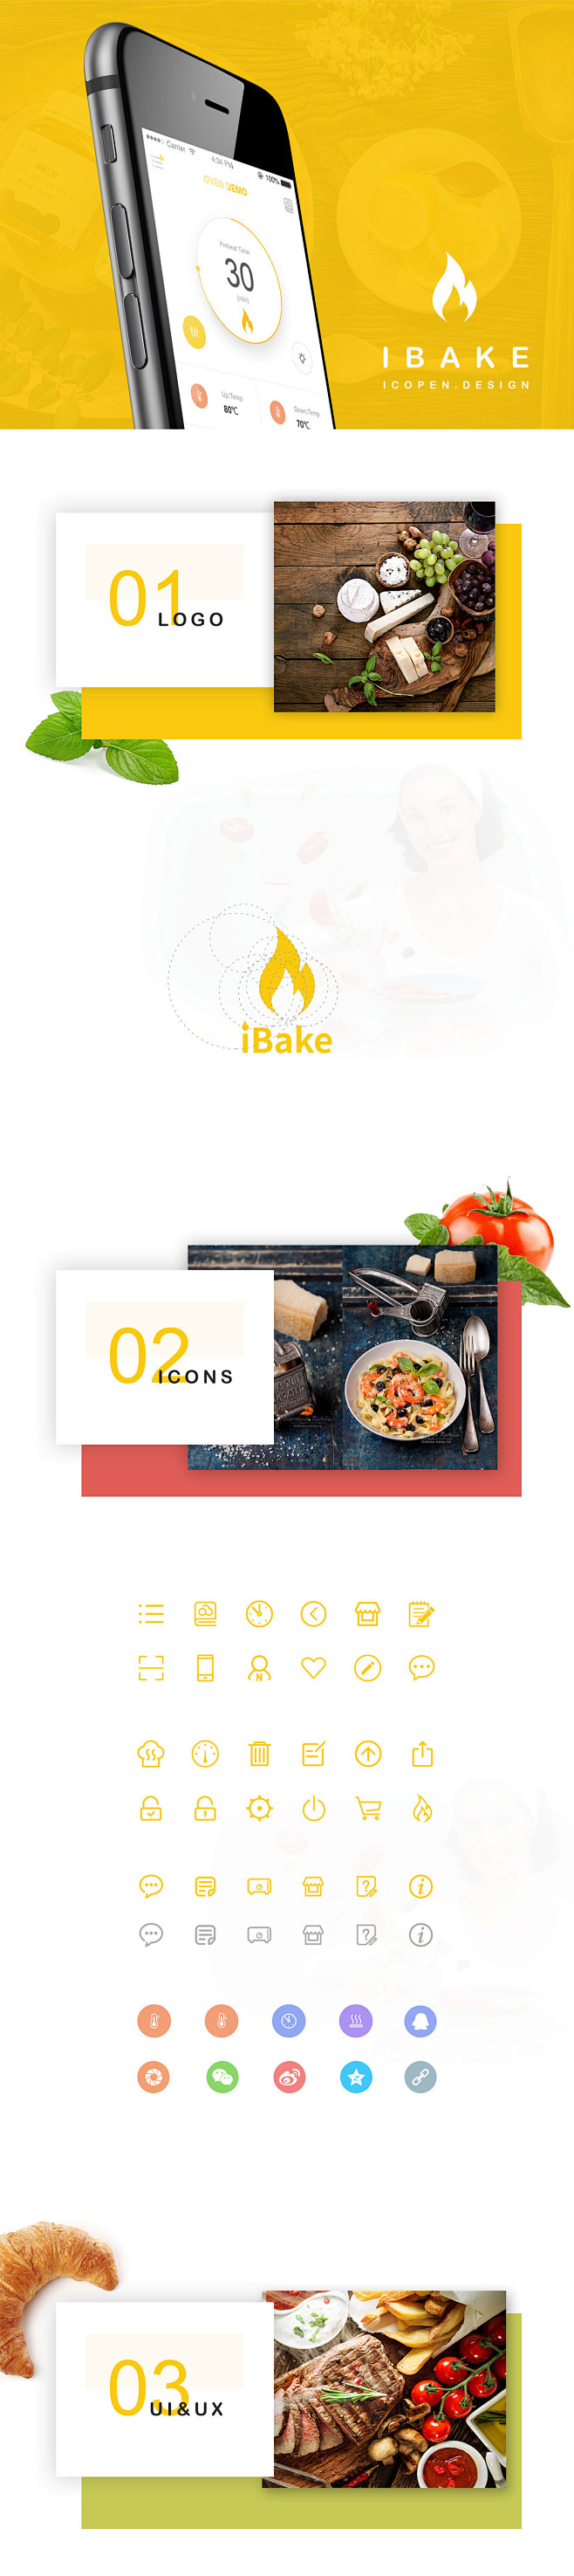 iBAKE-智能烤箱APP